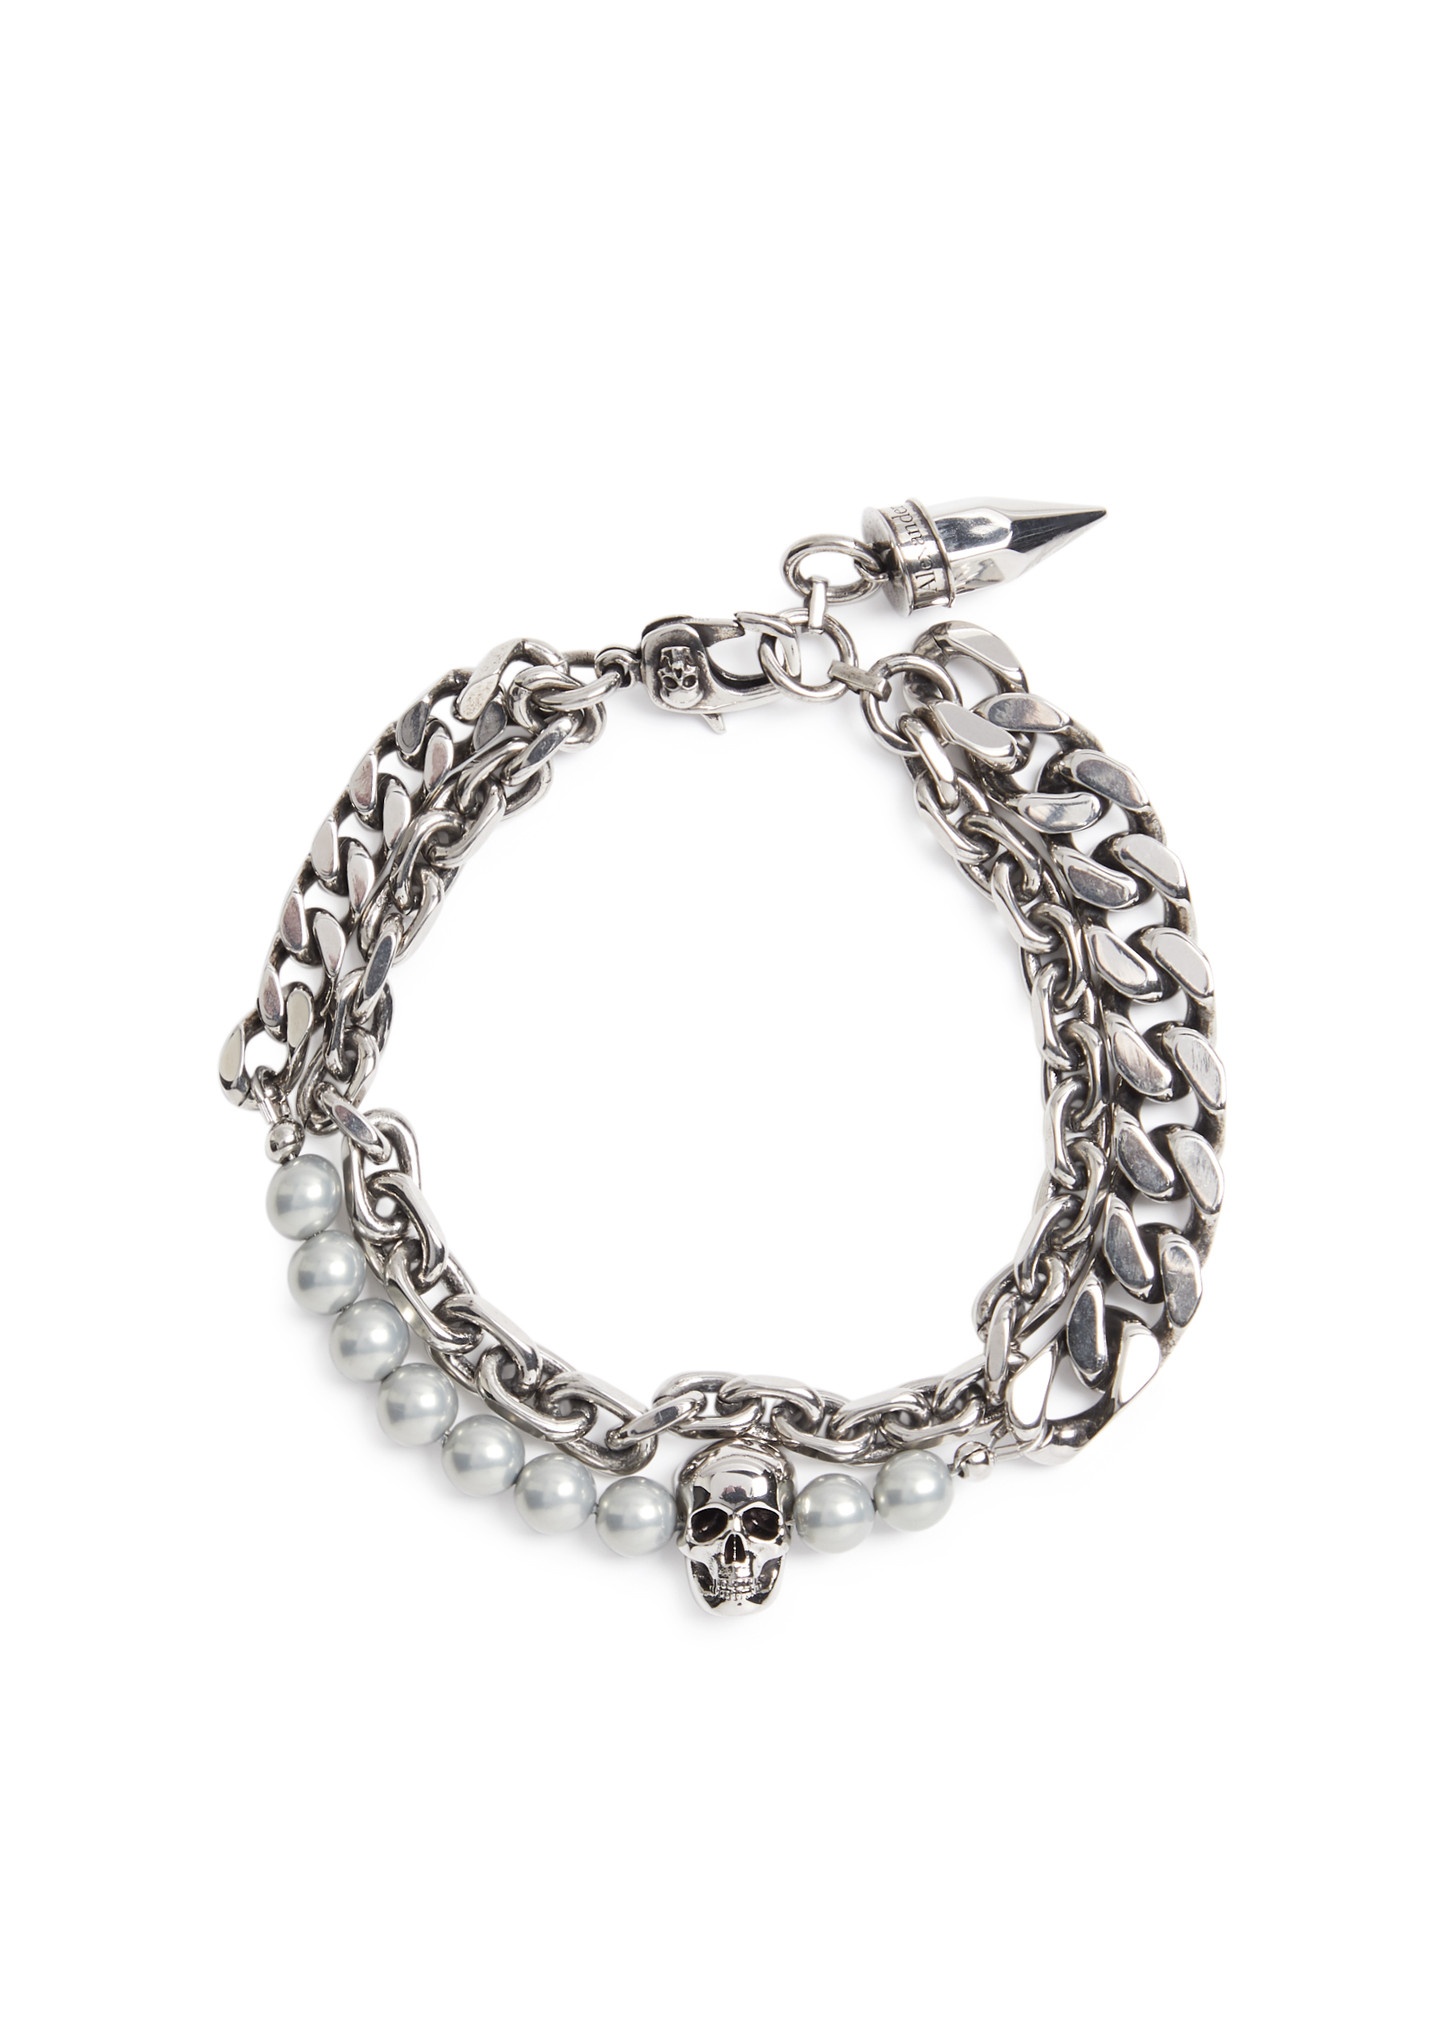 Skull embellished double chain bracelet - 1